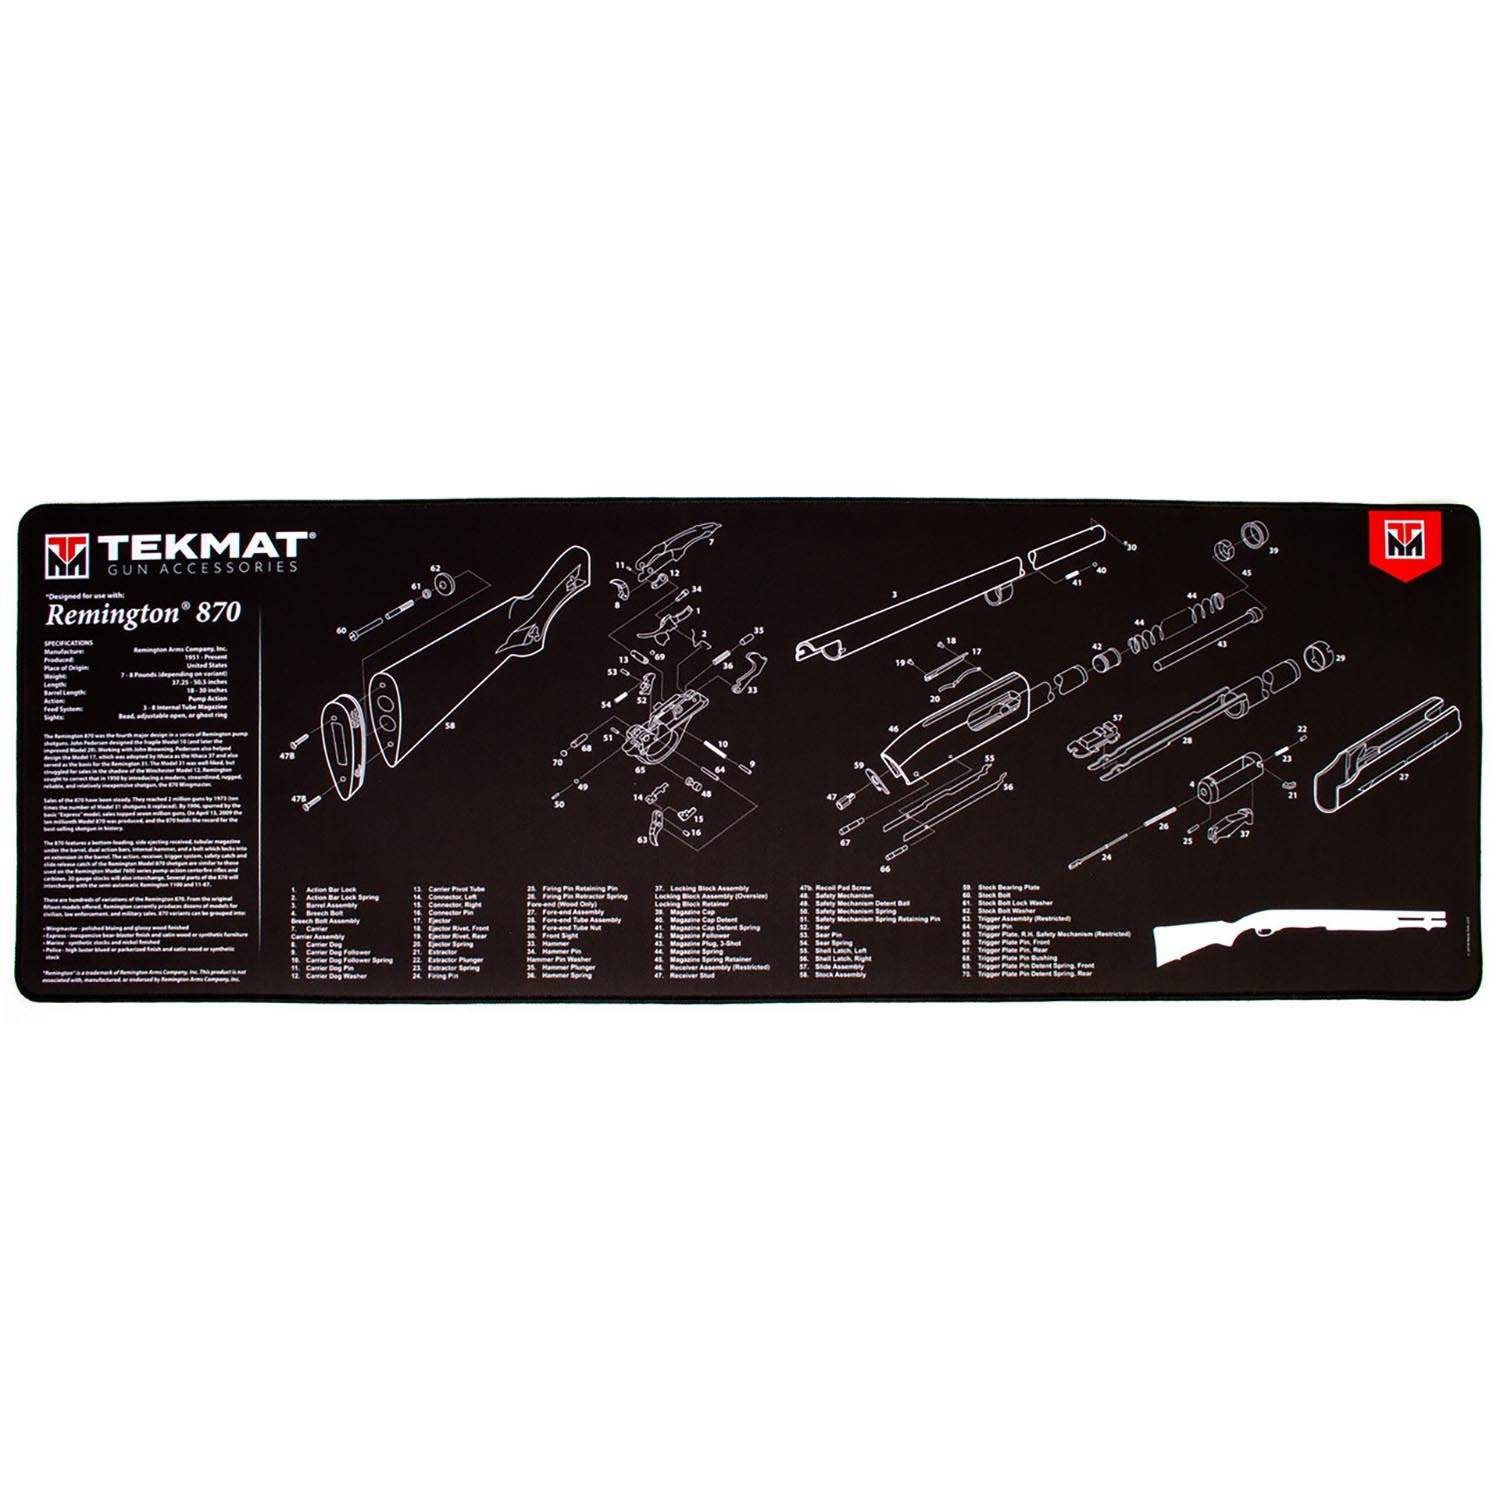 TekMat Ultra Remington 870 Gun Cleaning Mat 44"